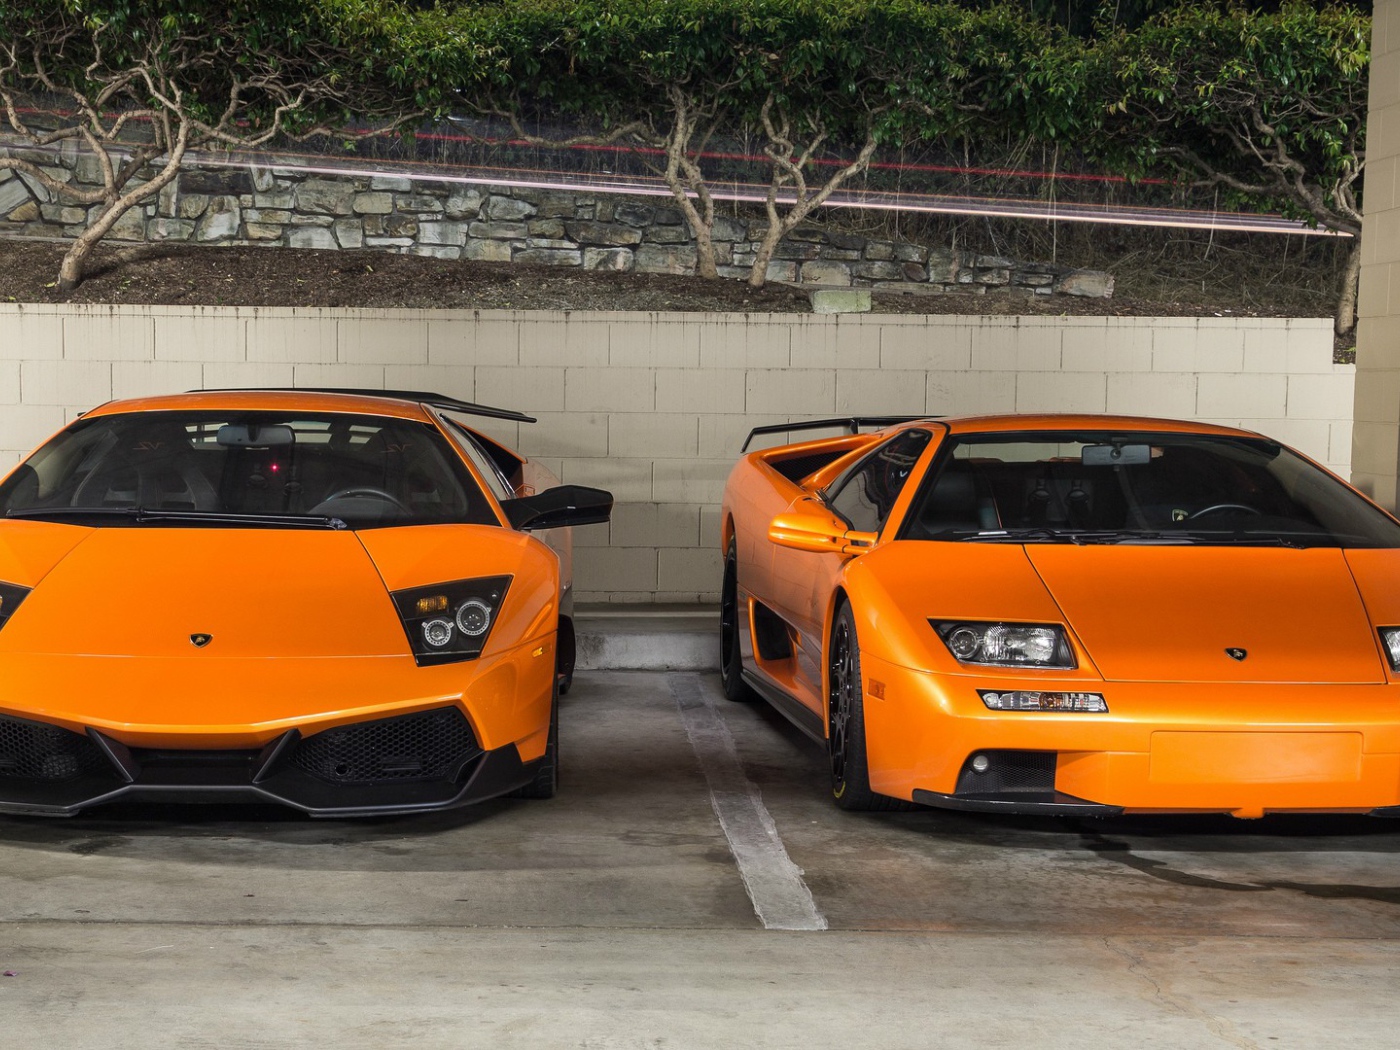 Orange sports cars Lamborghini Murcielago and Lamborghini Diablo